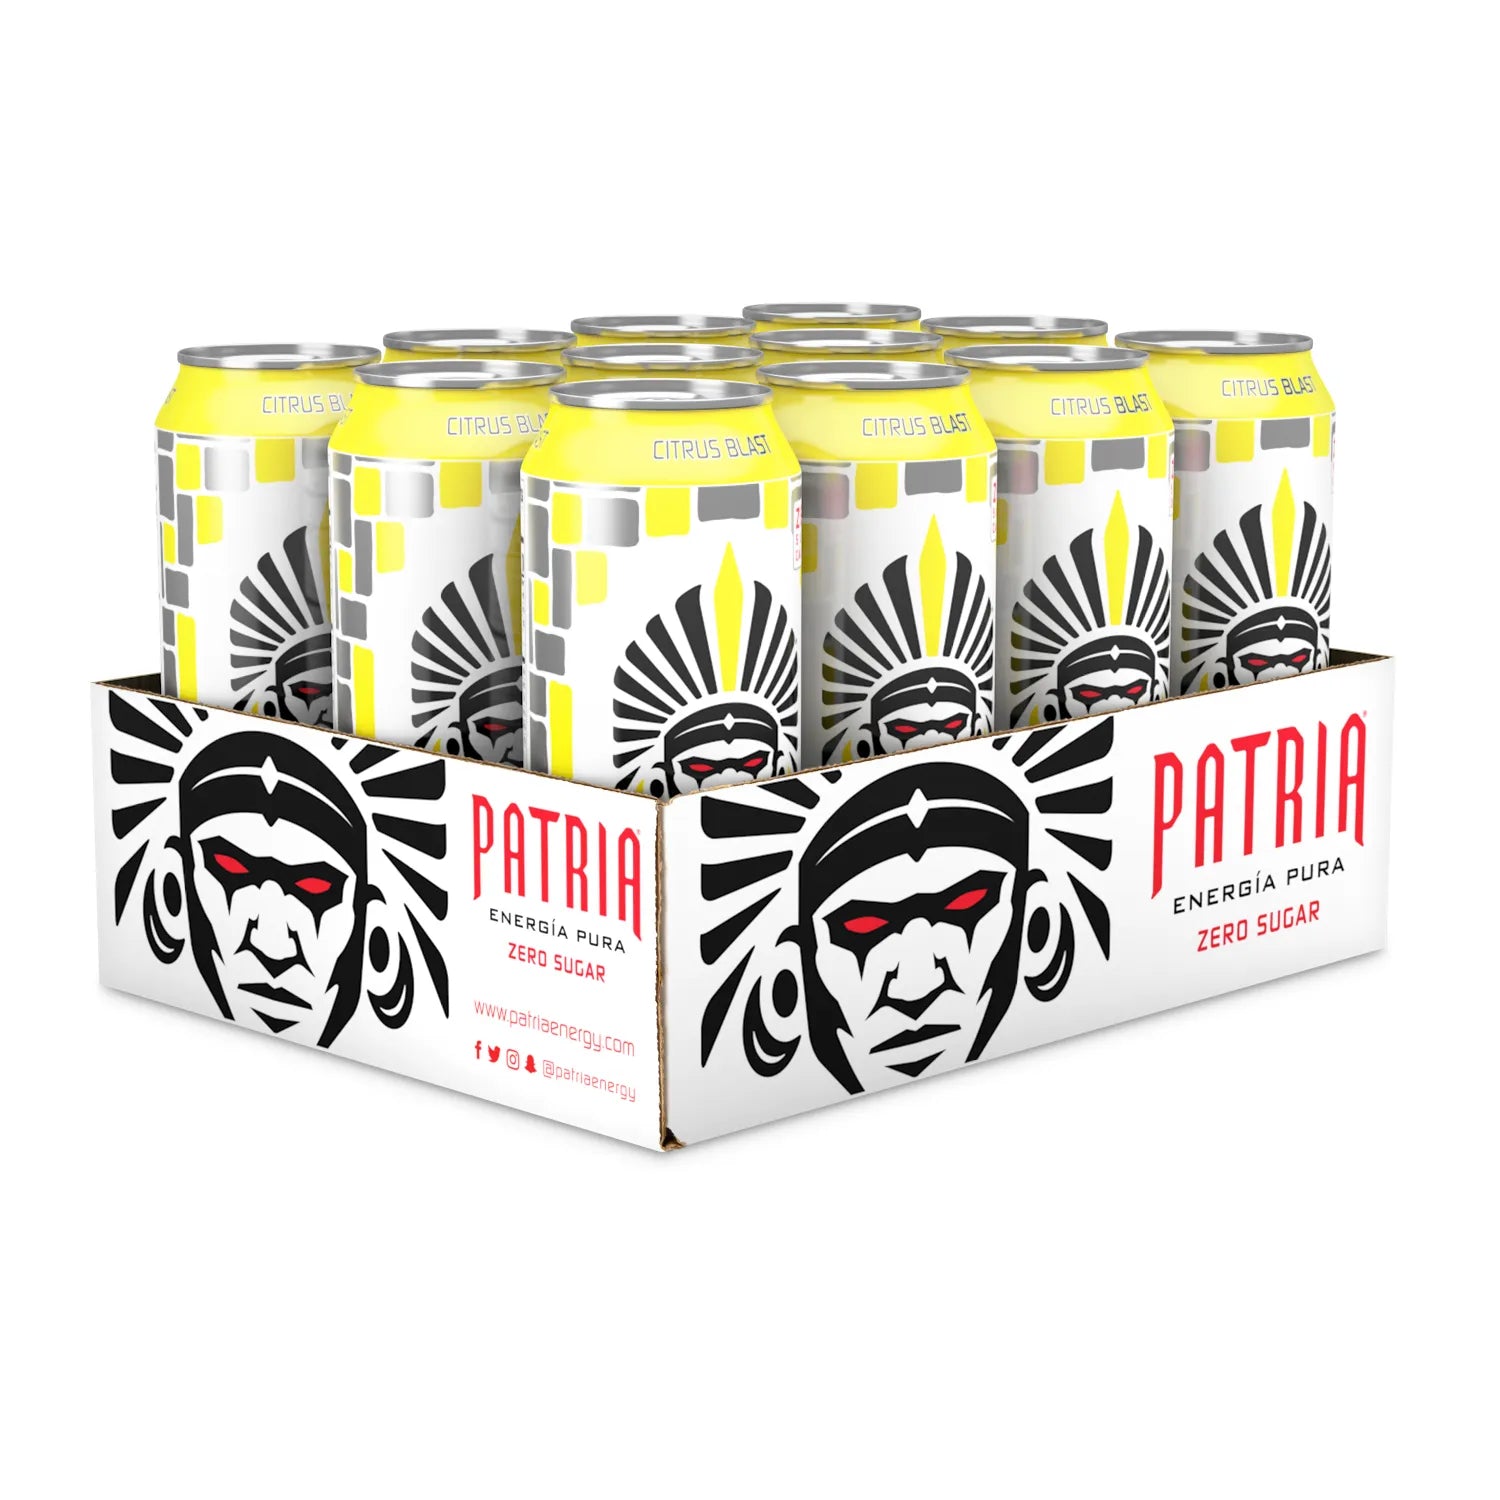 Patria Energy Drink - Citrus Blast - 16 oz Can (12 Pack Case)